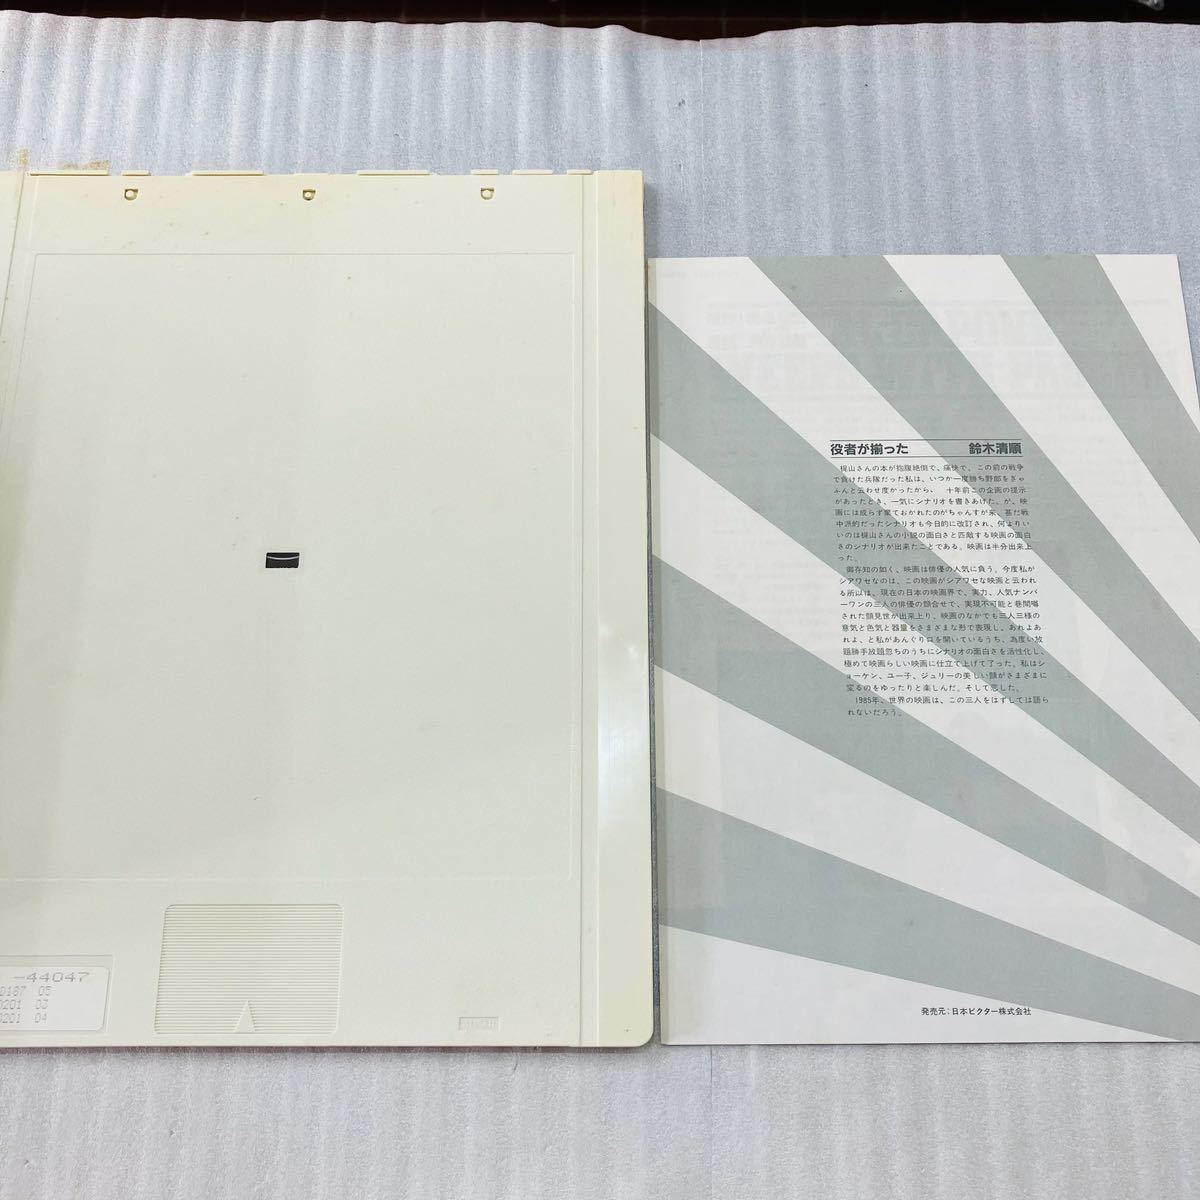 VHD 2 листов комплект [kapone большой .. плач .] Hagiwara Ken'ichi / Sawada Kenji / рисовое поле средний ..Victor Victor 